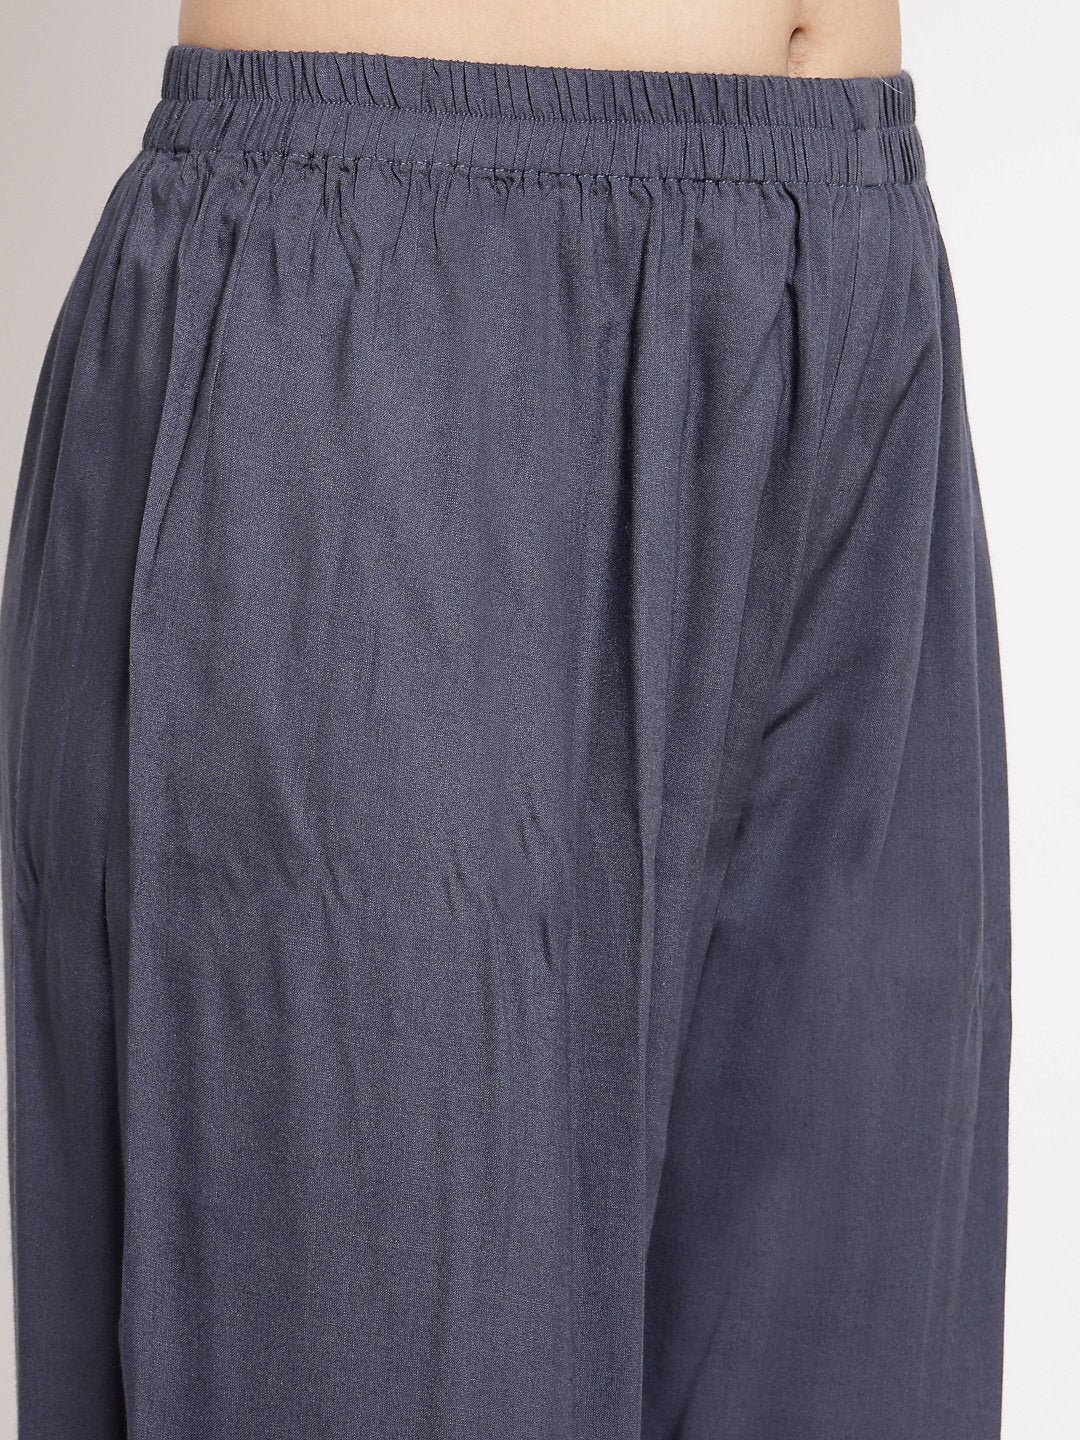 Women's Grey Cotton Solid 3/4 Sleeve V Neck Casual Kurta Palazzo Dupatta Set - Myshka